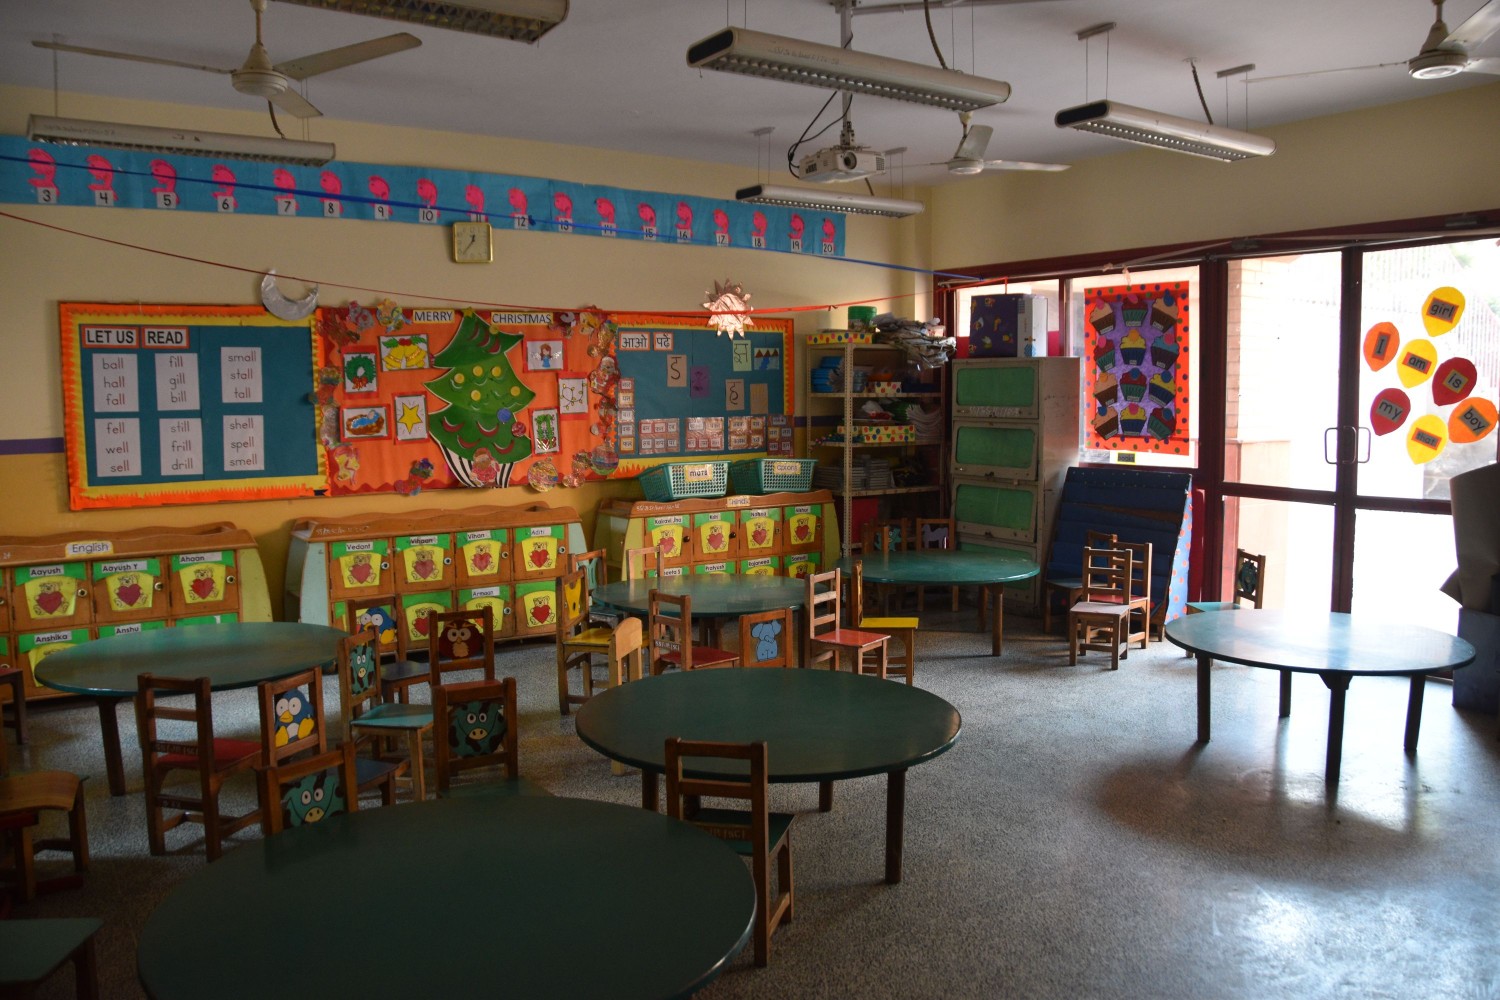 Photo of a colourful nursery classroom.